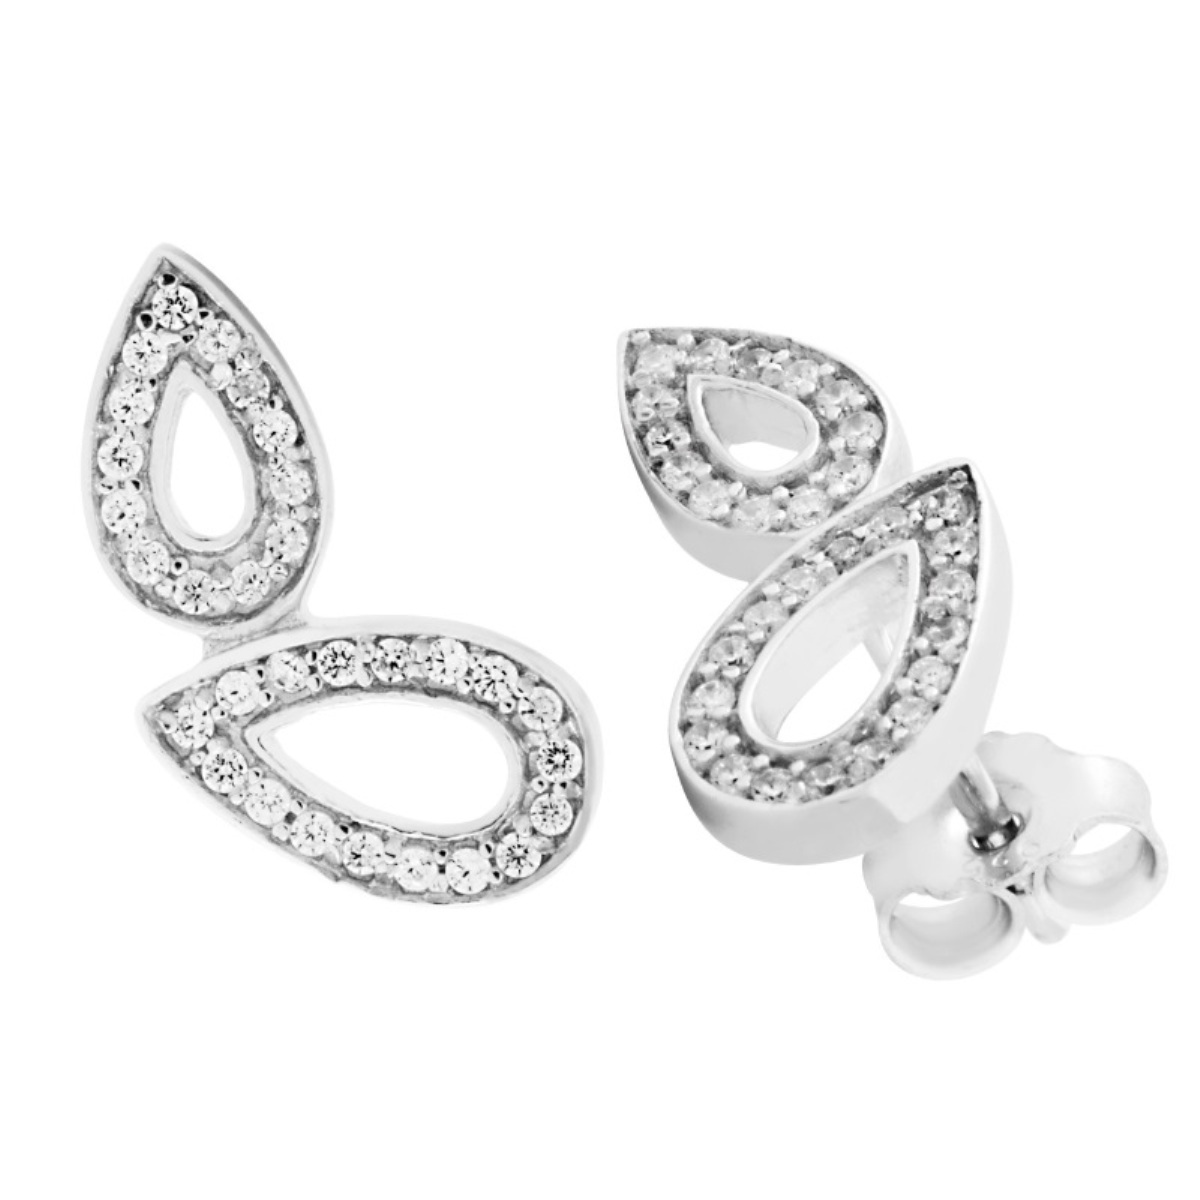 Cubic Zirconia Twist Pear Earrings, Rhodium Plated Sterling Silver